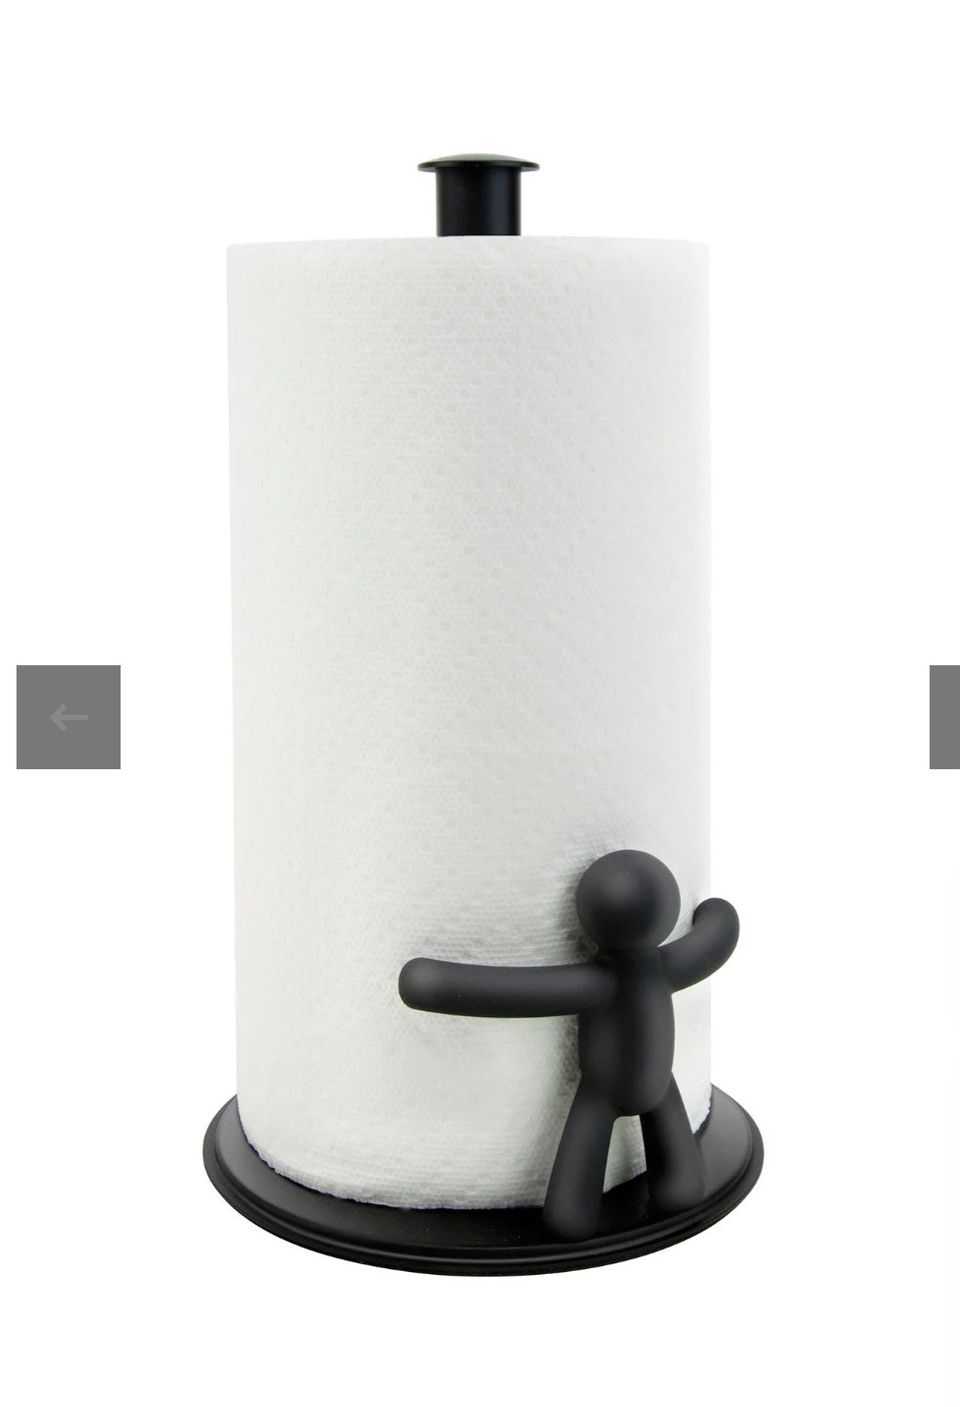 Uusi Buddy paper towel holder